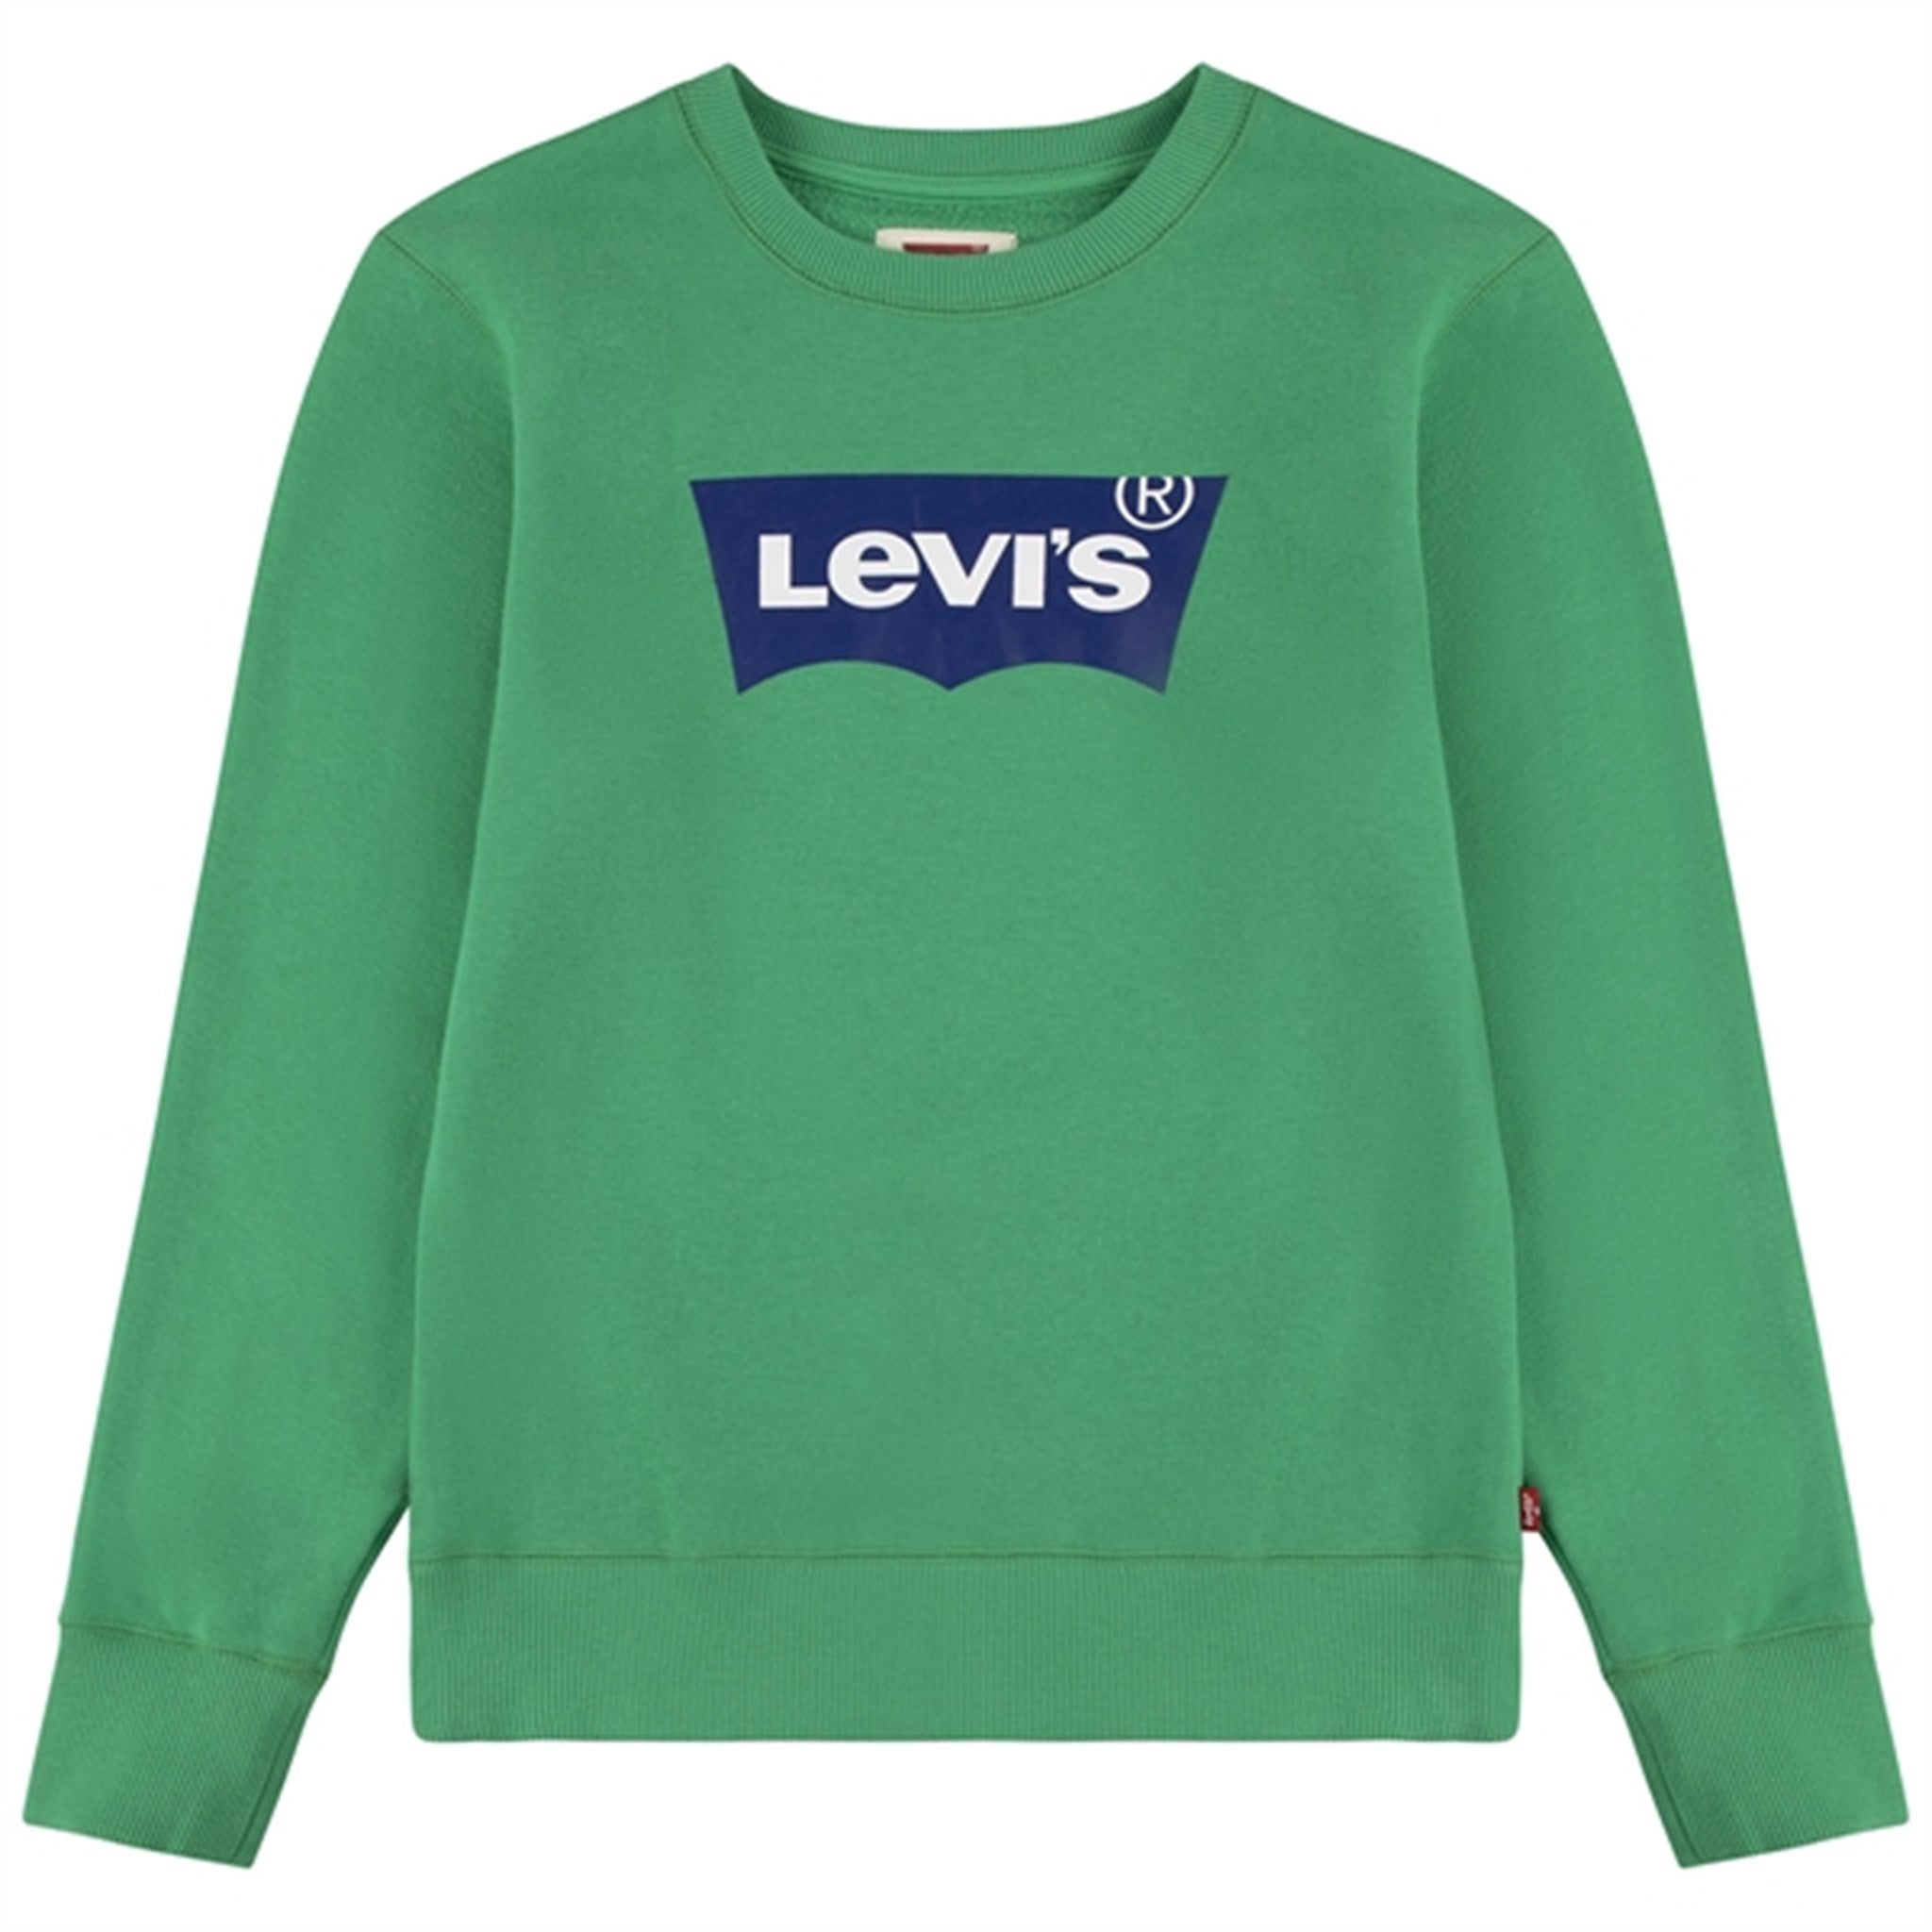 Levi's Batwing Crewneck Sweatshirt Bright Green